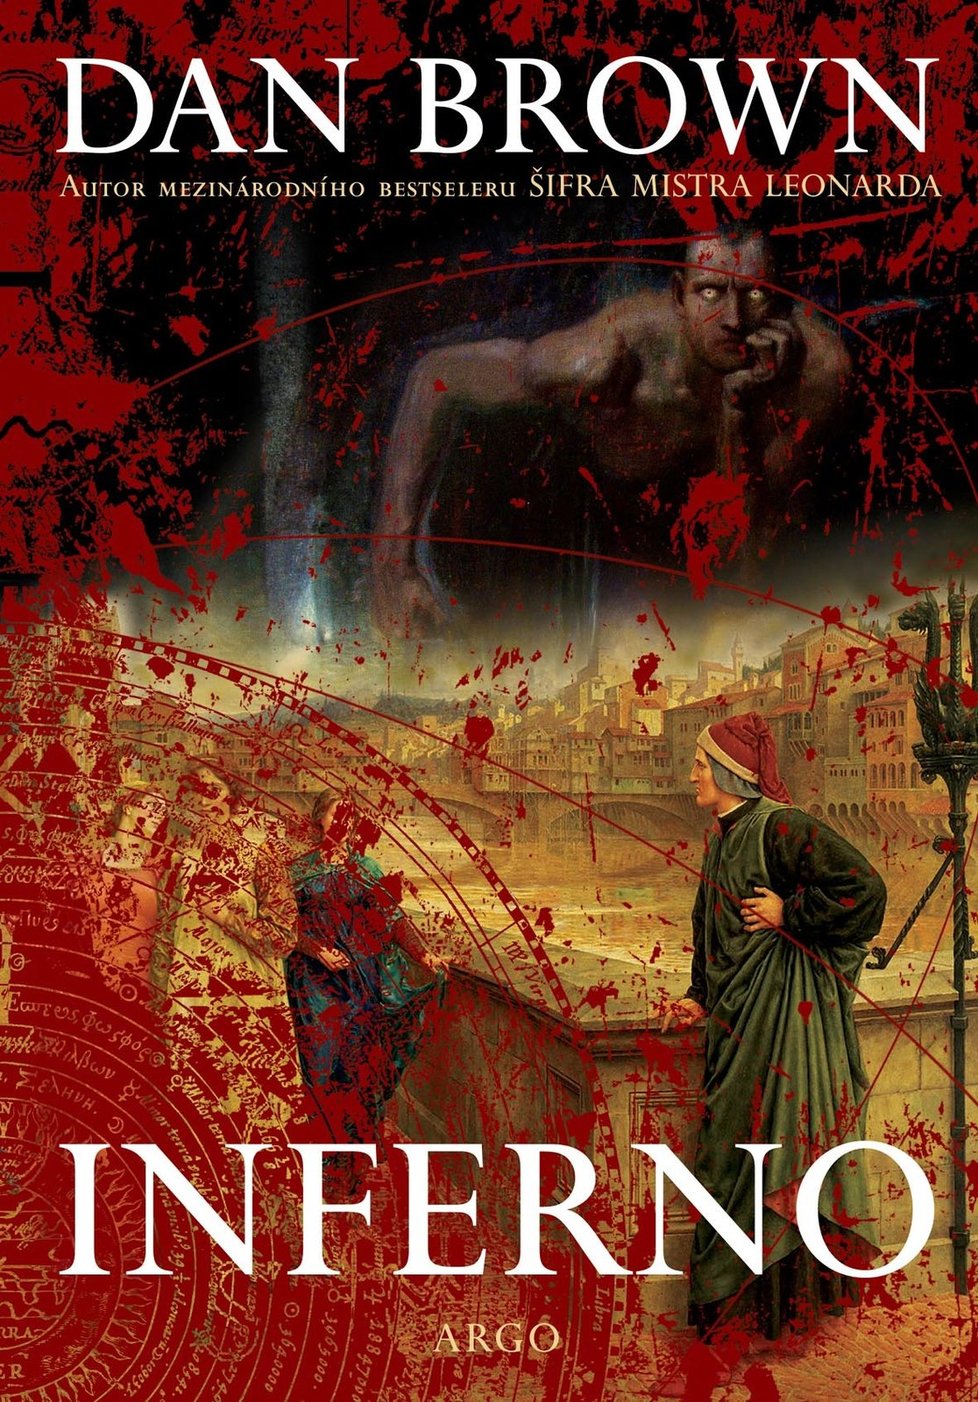 Inferno od Dana Browna - Cena: 448 Kč, kde: prodejny knih